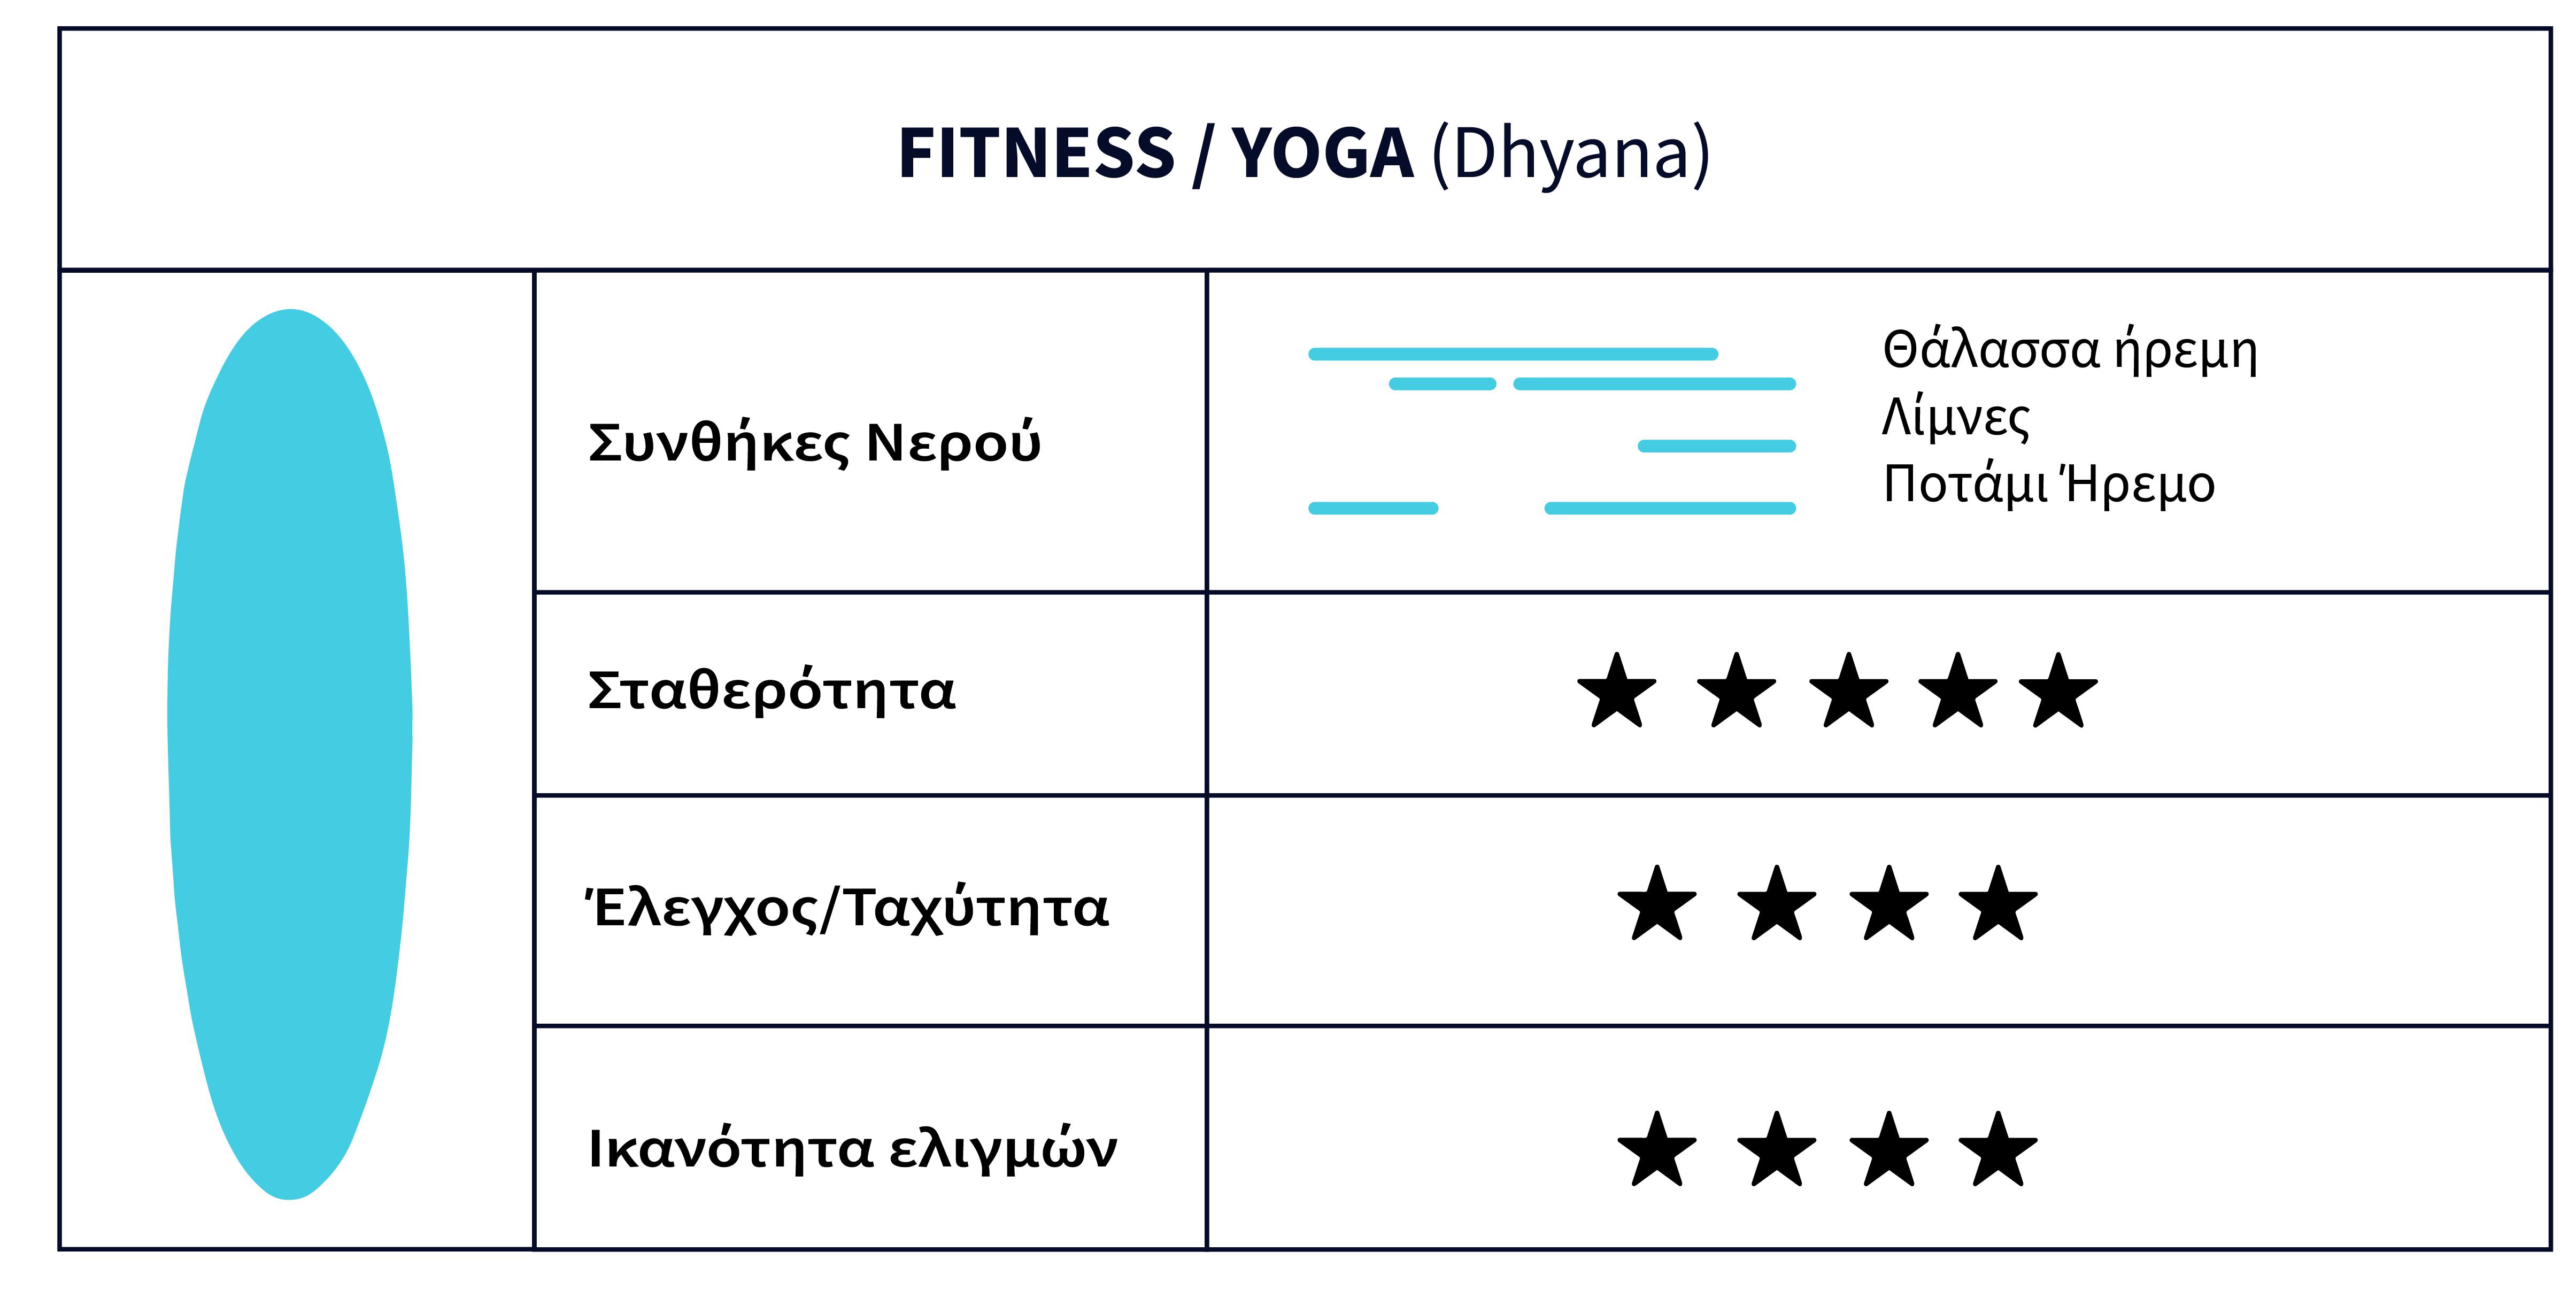 Fitness/Yoga